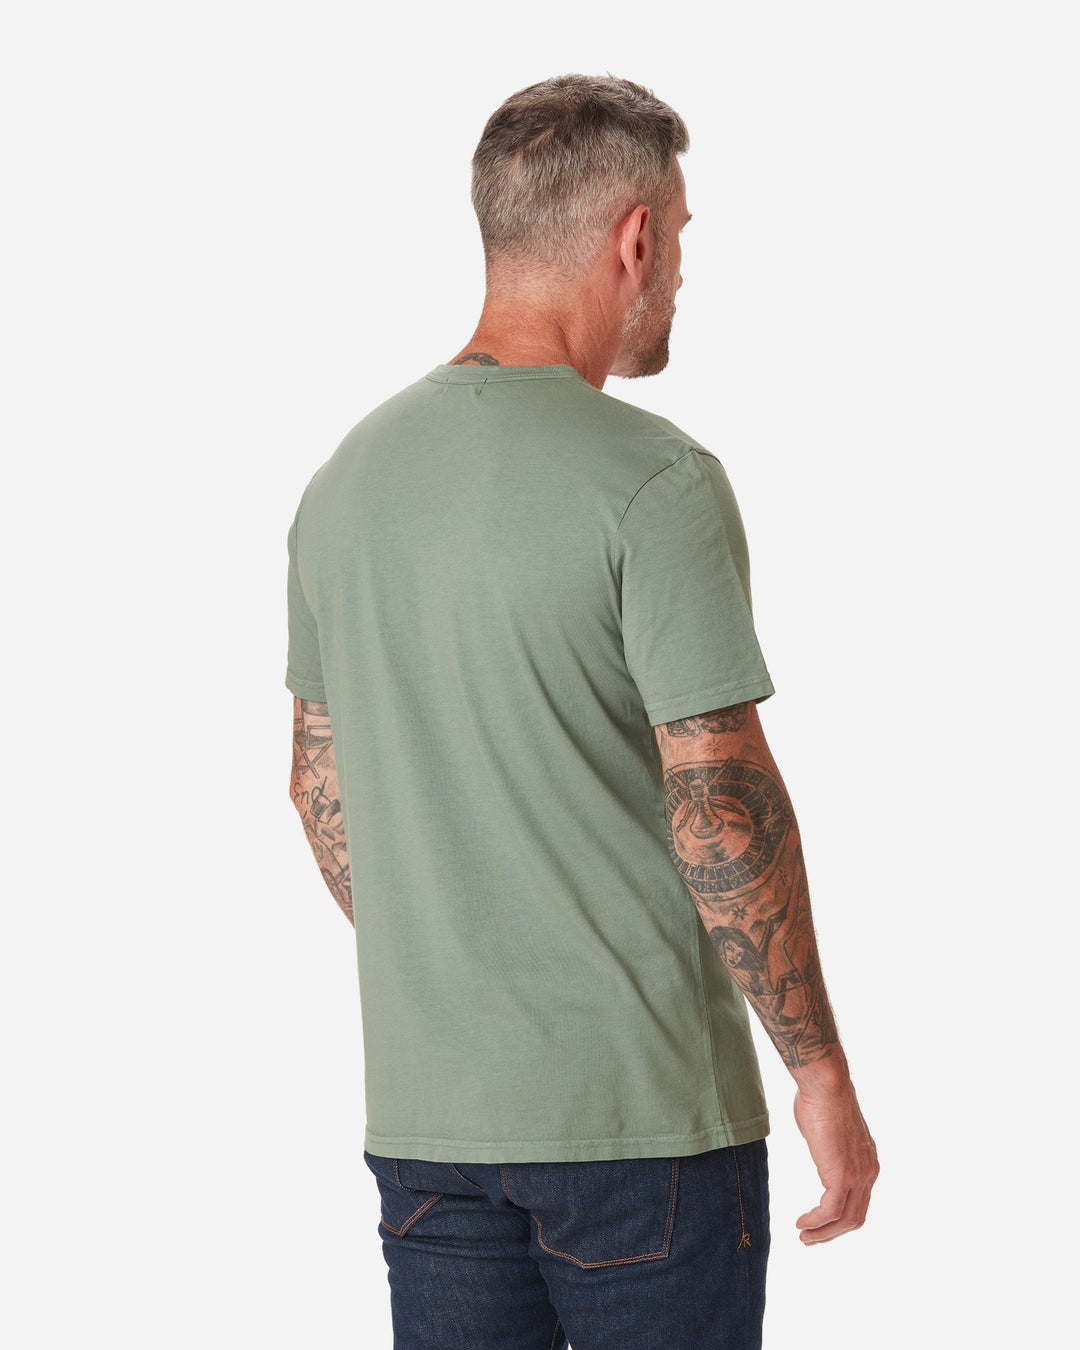 back of model facing away with a rightward gaze wearing  Ace Rivington seafoam "sage" light green long staple cotton super soft supima cotton shirt